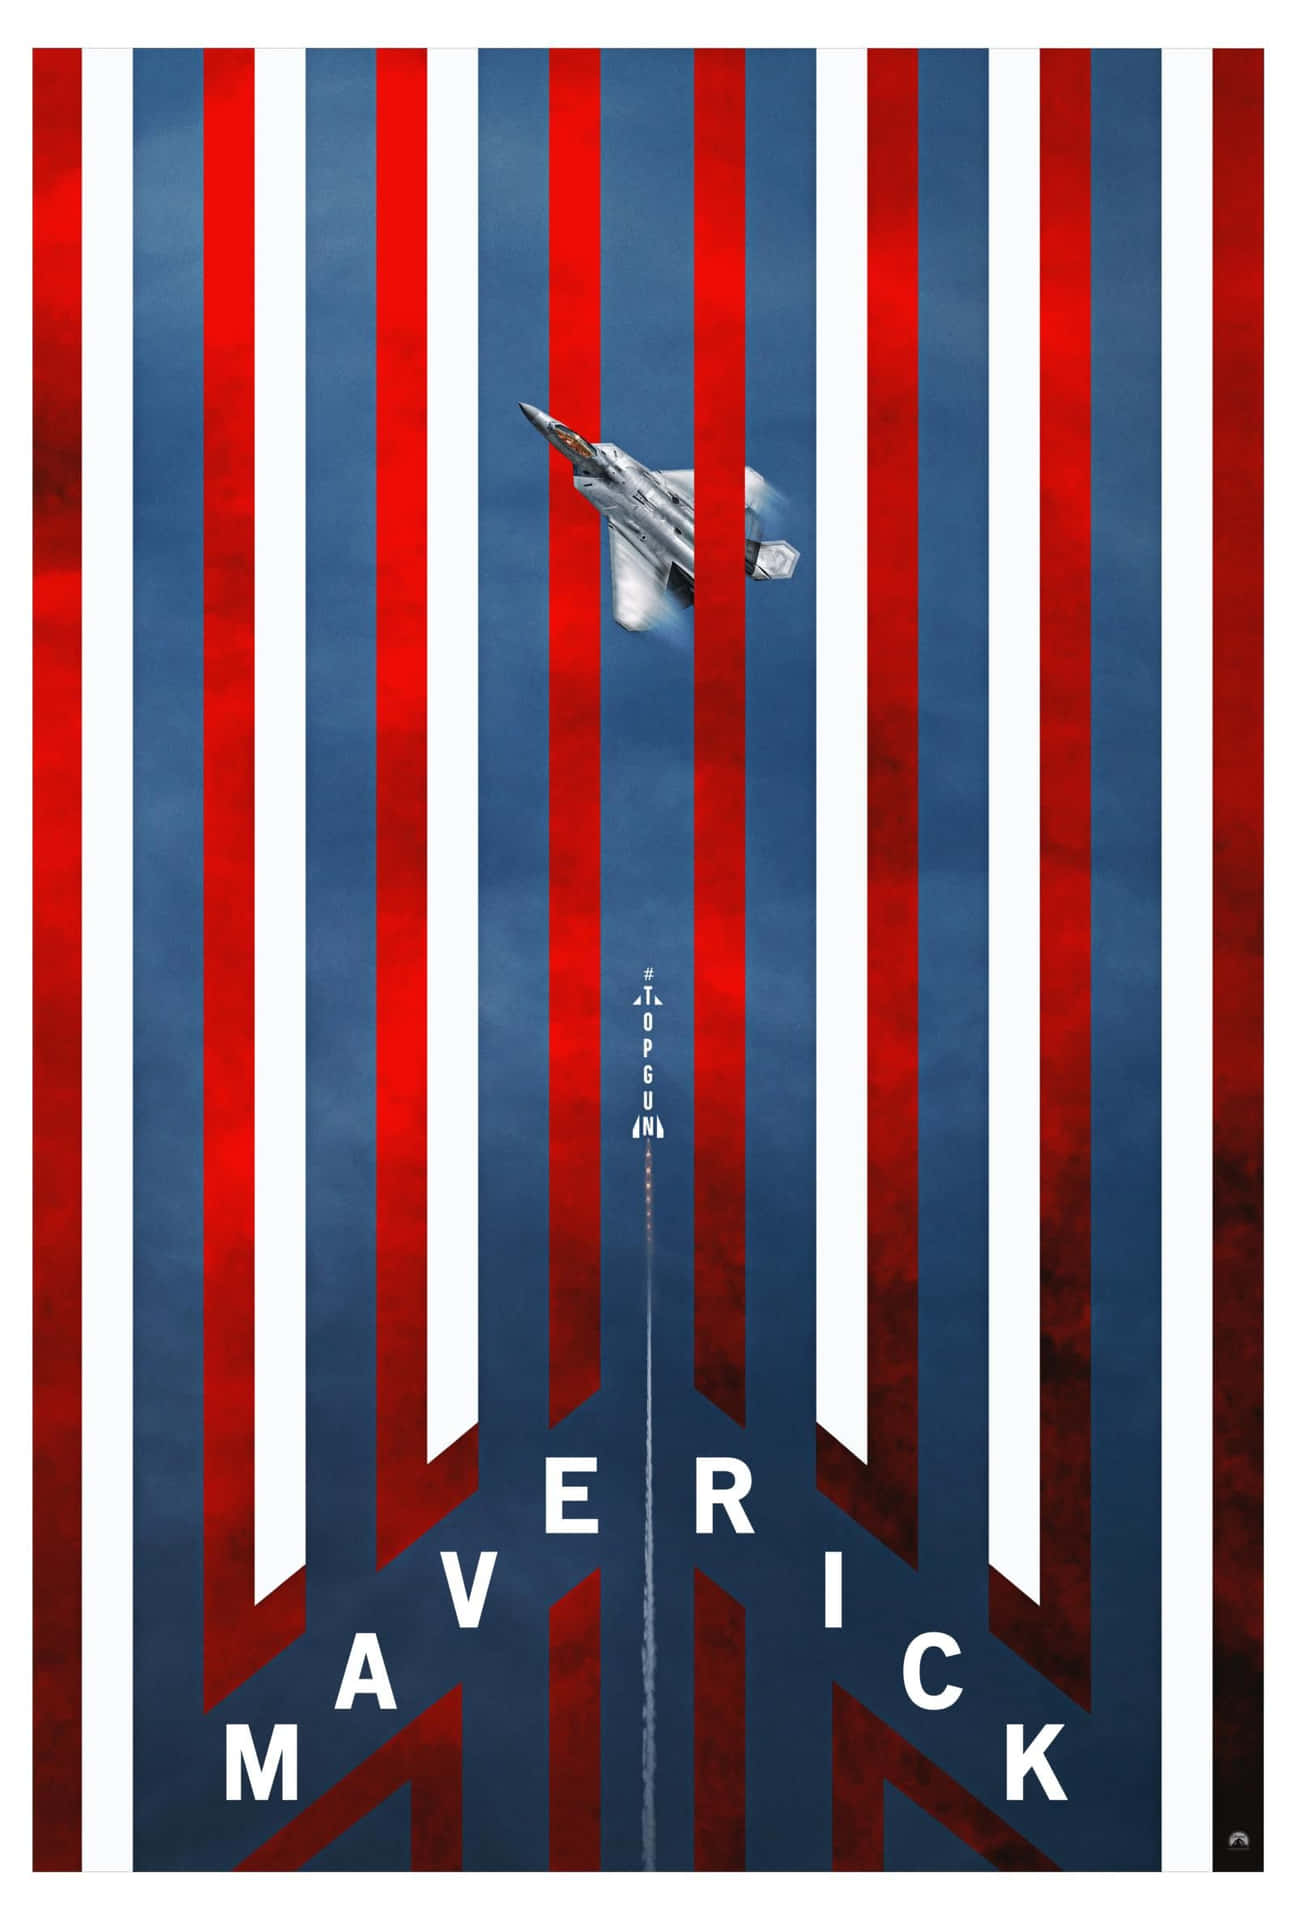 Top Gun Maverick 2022 Movie Poster